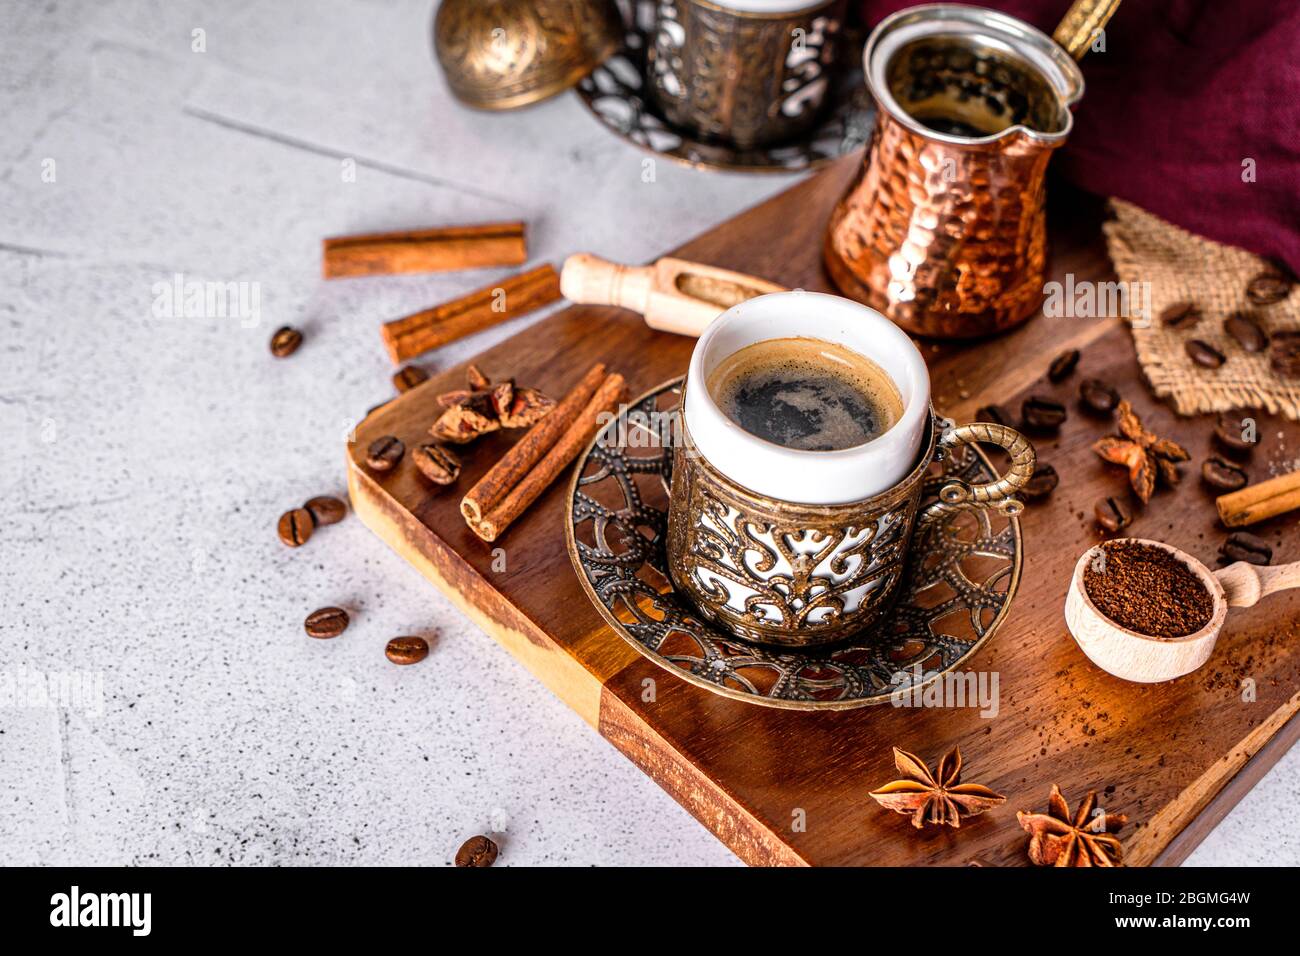 Taza de café, frijoles y cuchara con polvo molido sobre un fondo blanco moderno Foto de stock